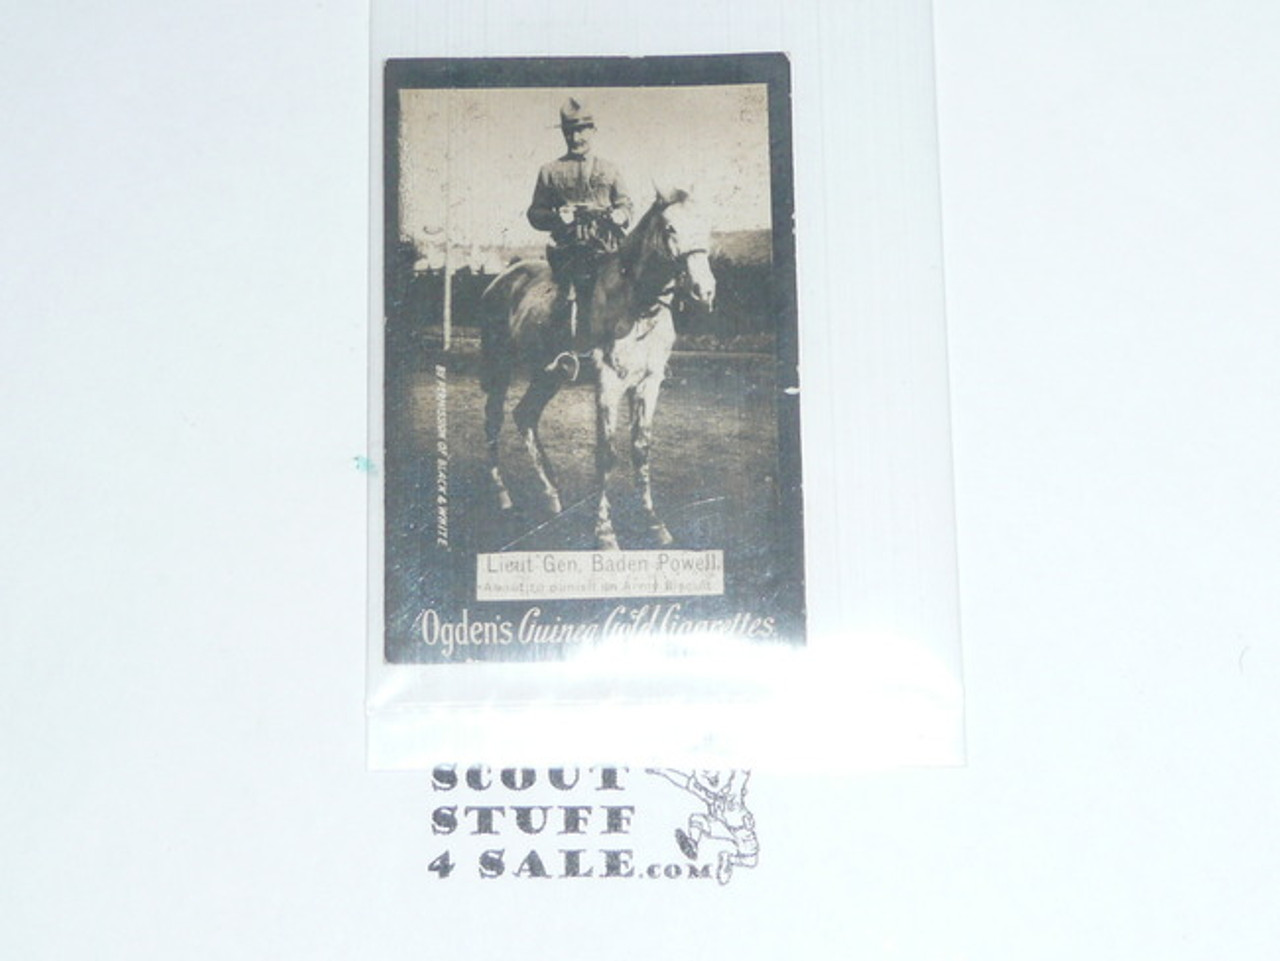 Ogden's Guinea Gold Cigarettes, Lieut. Gen. Baden Powell on horse, minimal wear